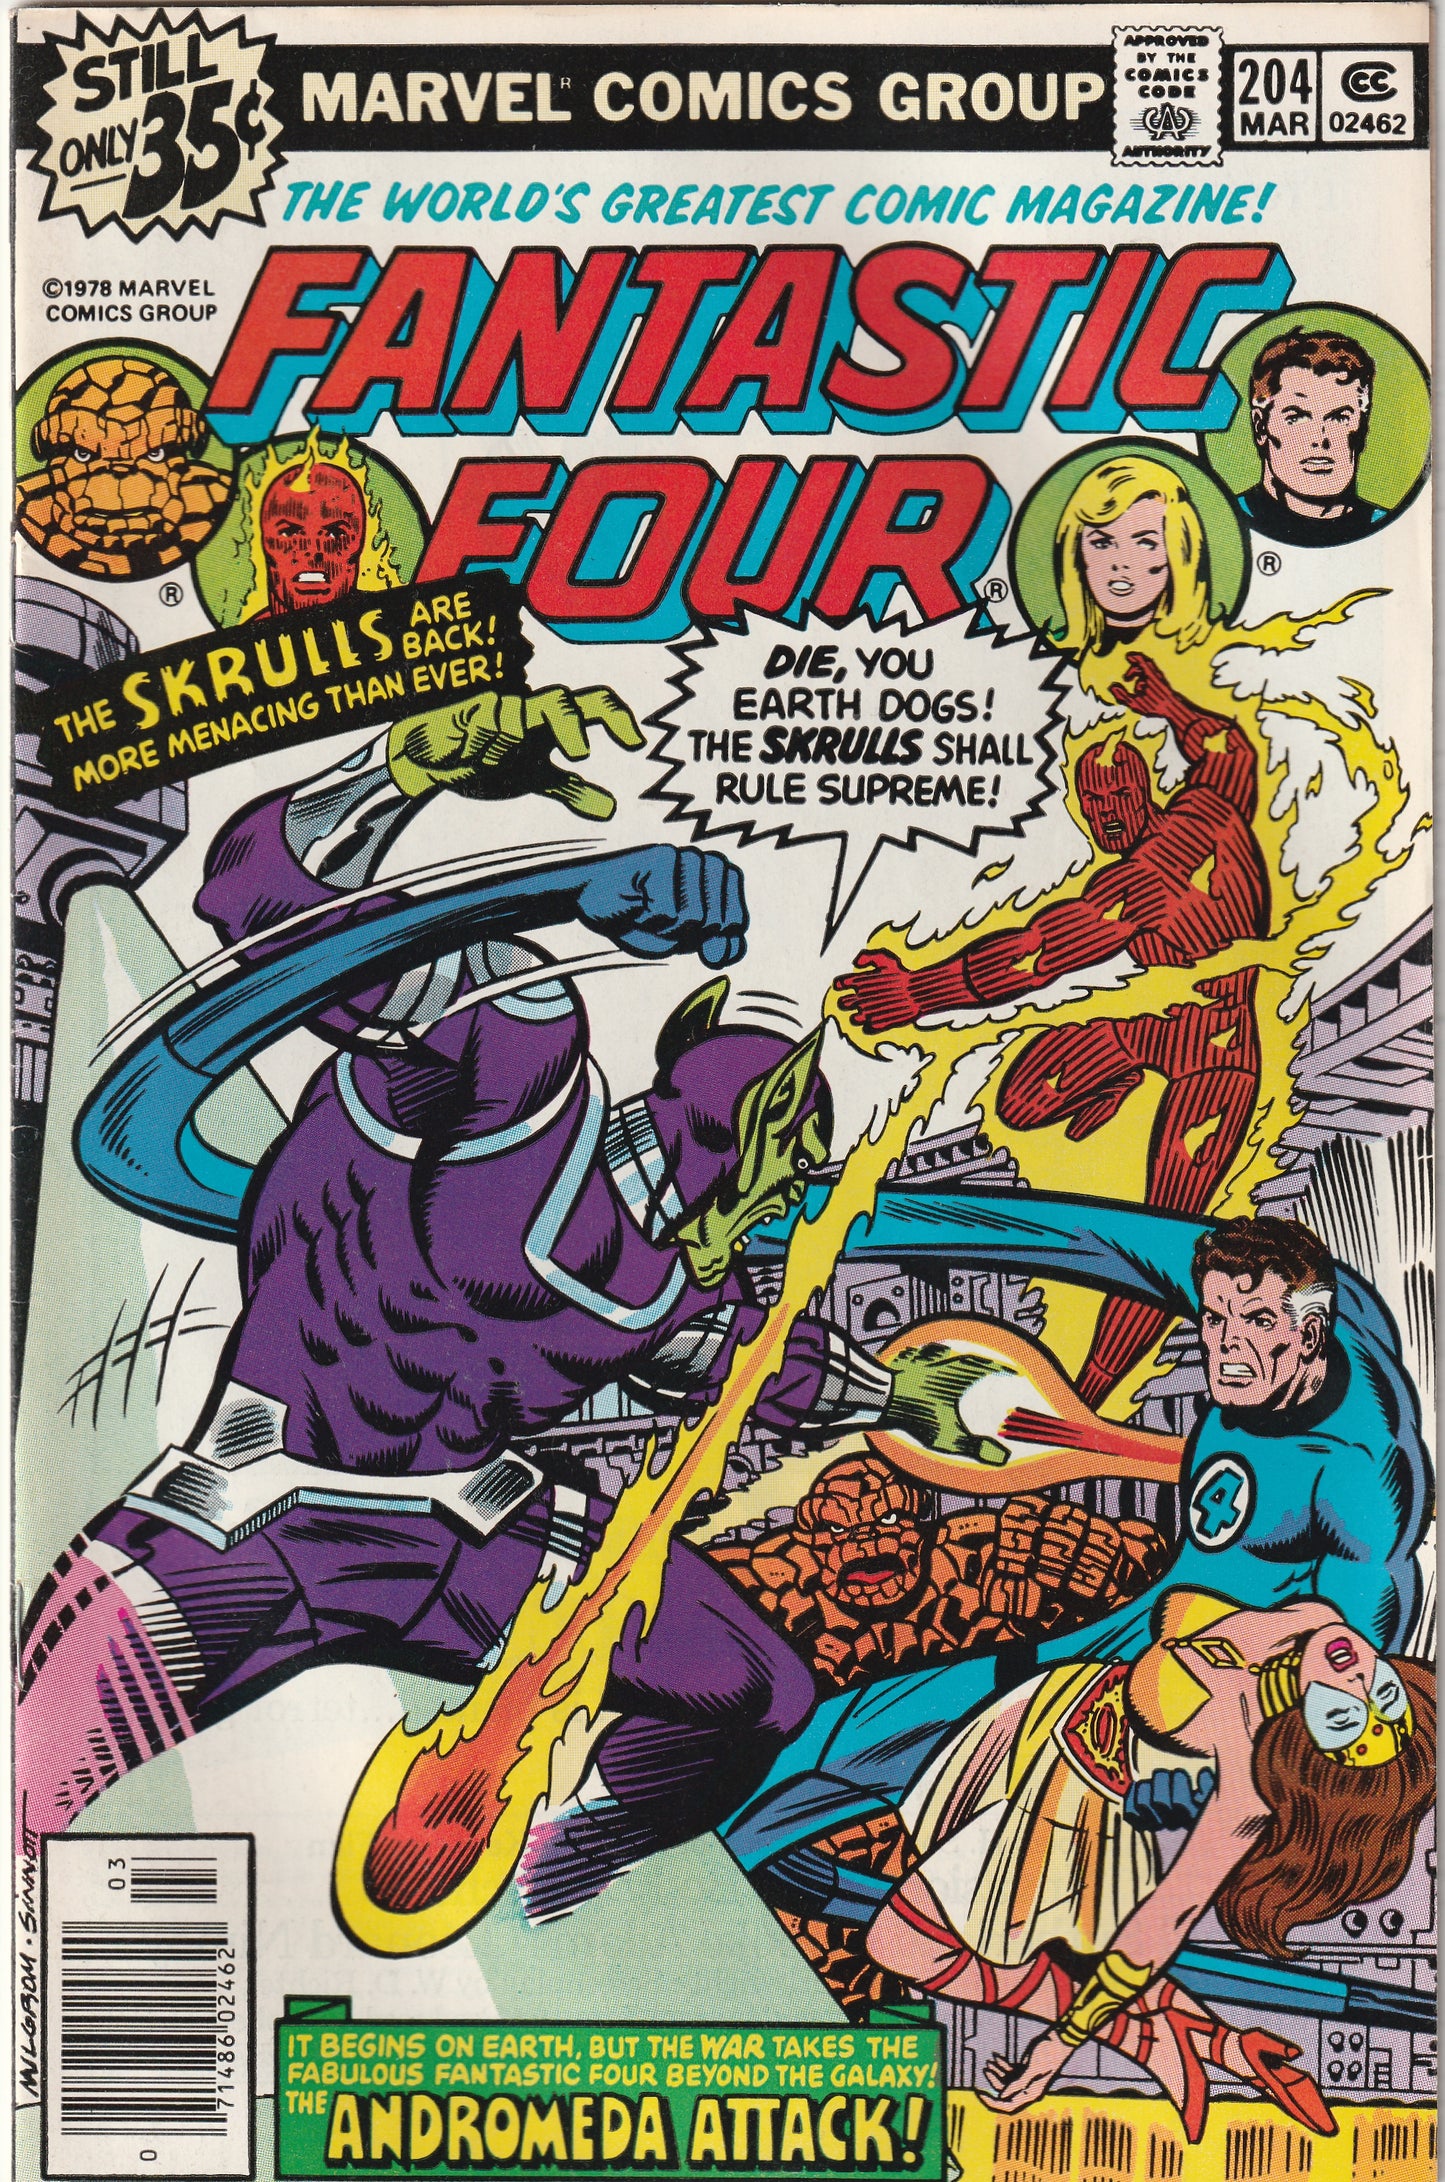 Fantastic Four #204 (1979) - 1st Appearance of Queen Adora and Tanak Valt, 1st Nova Corps